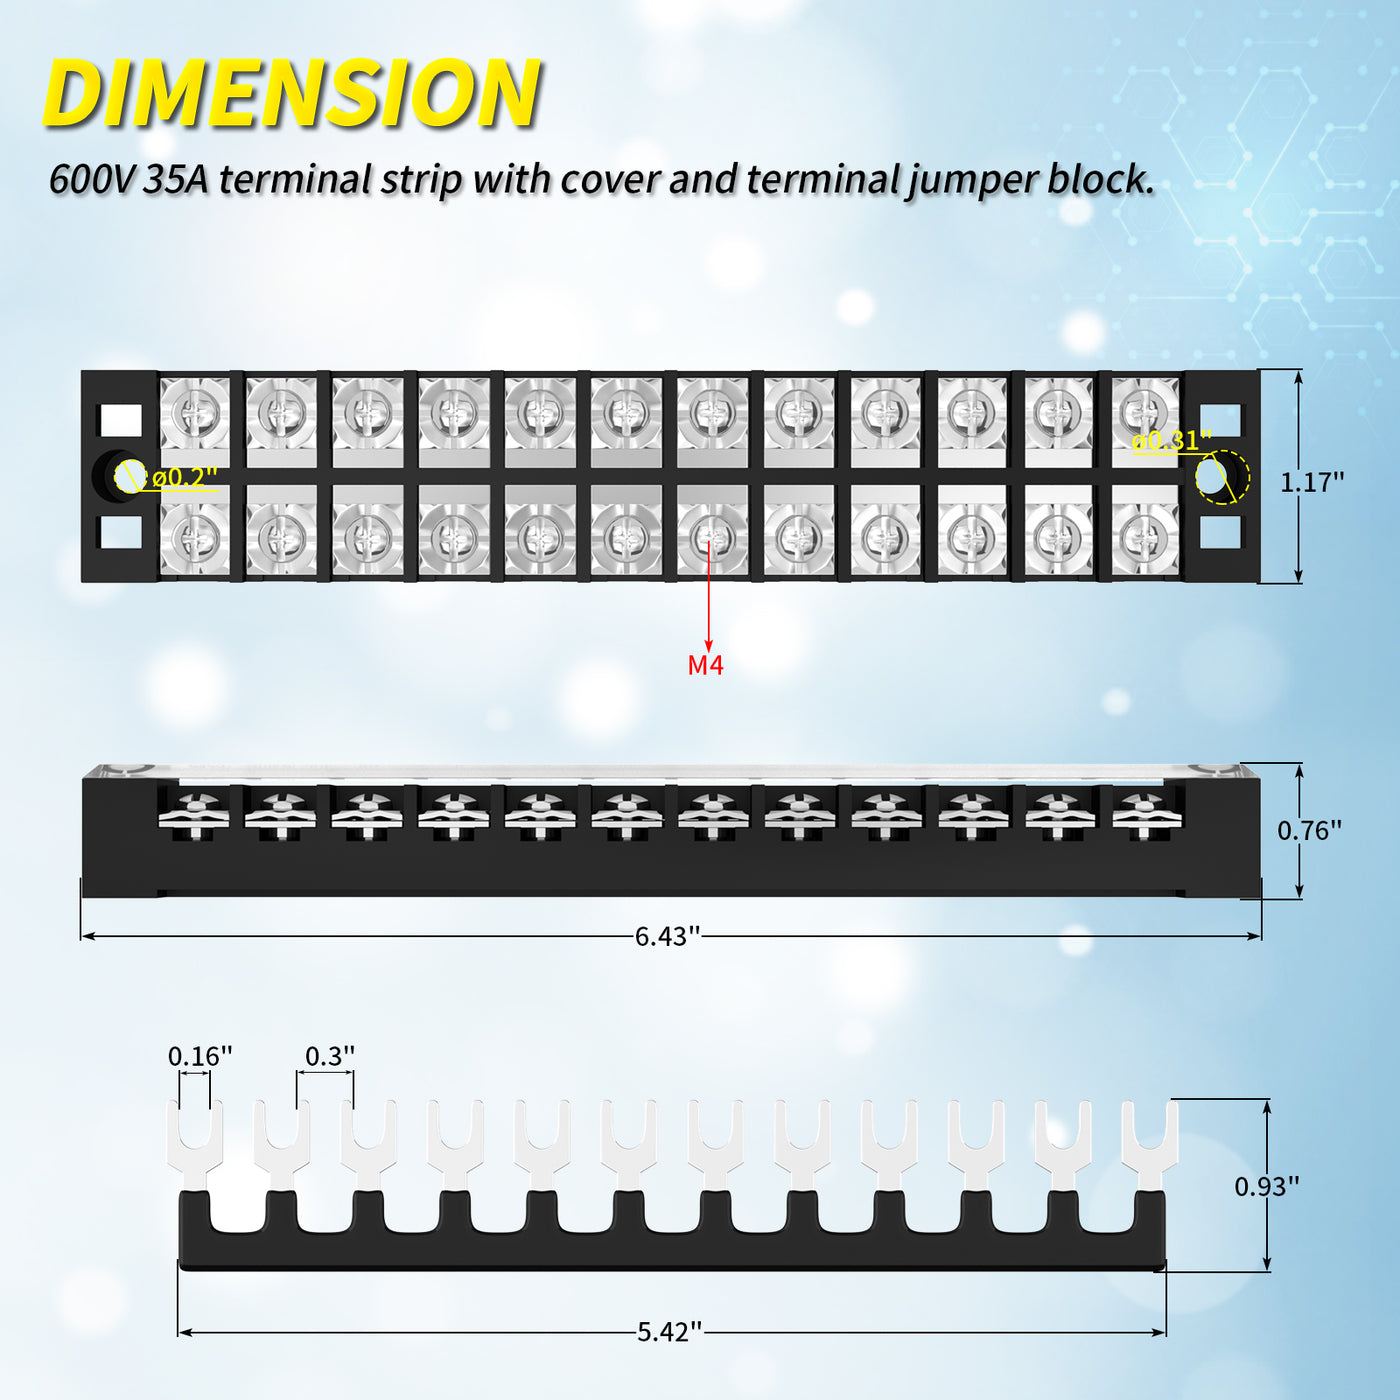 TB-3512 12 Position Terminal Jumper Block Dimension